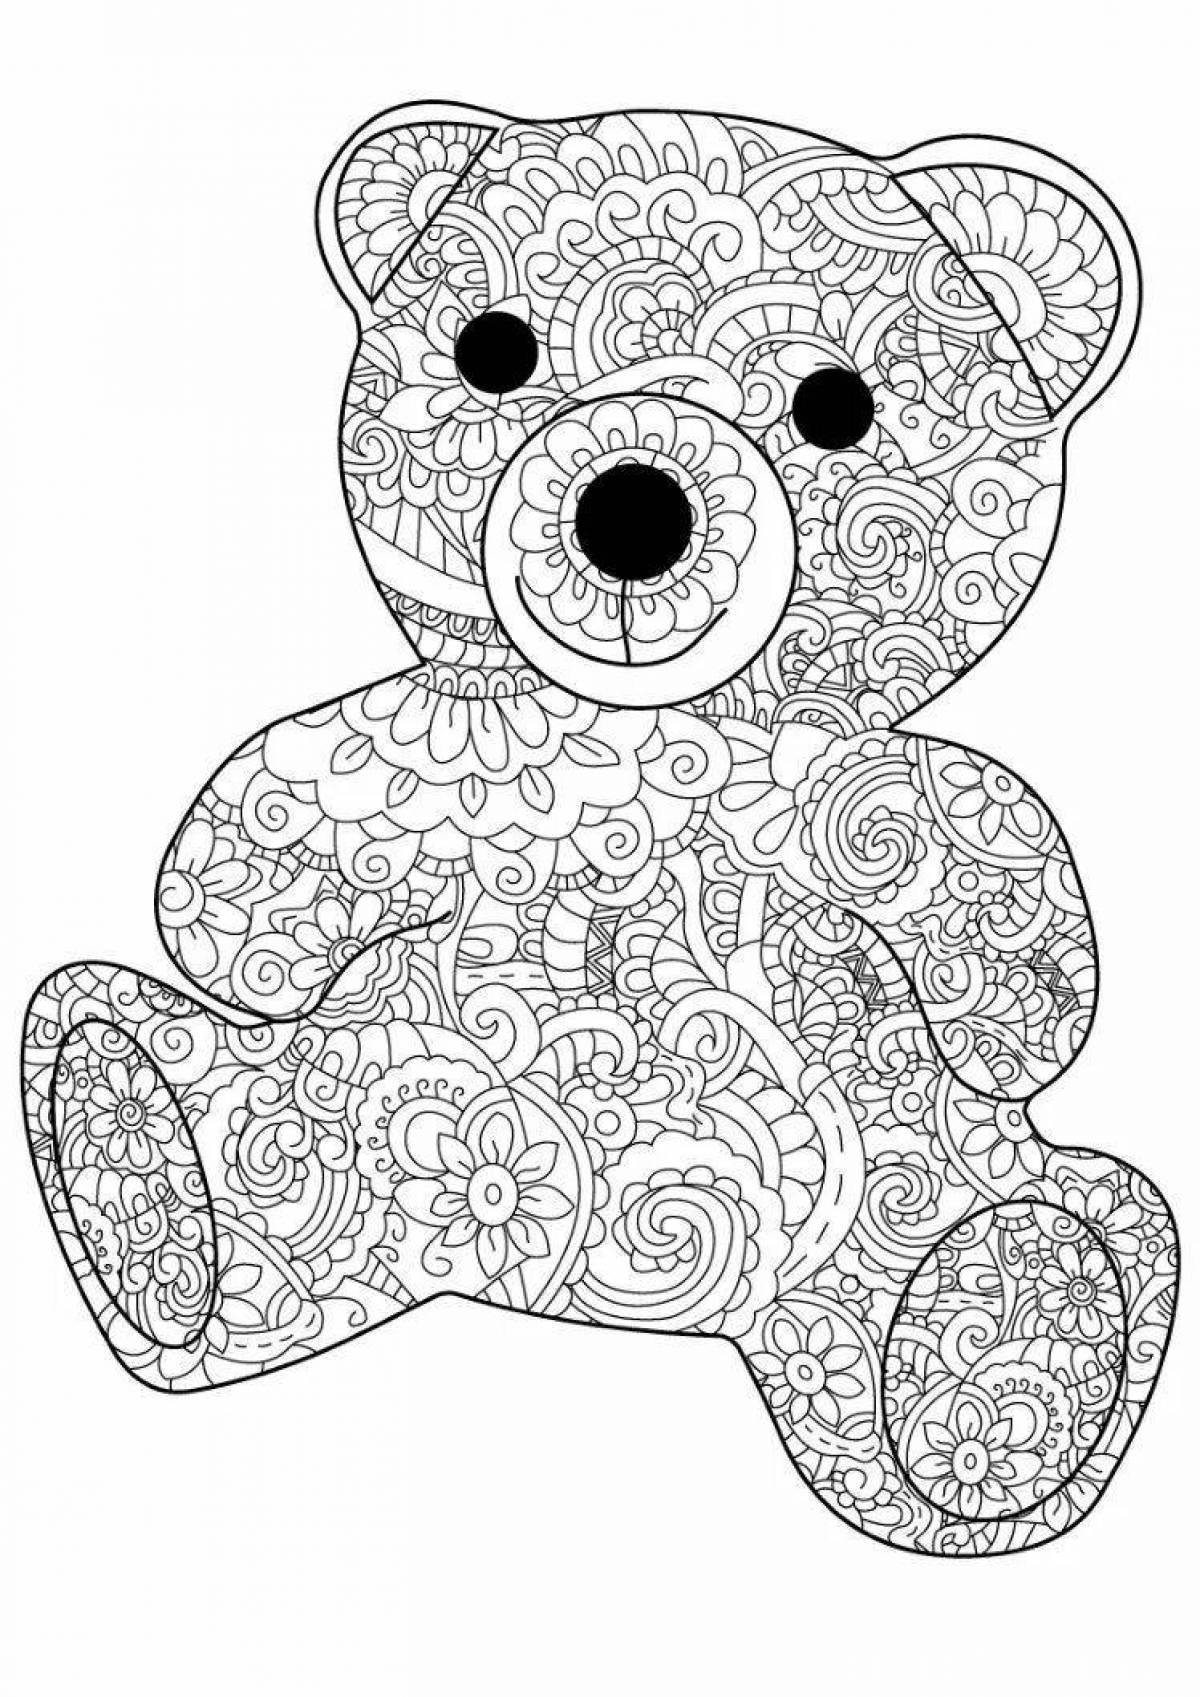 A fascinating anti-stress bear coloring book